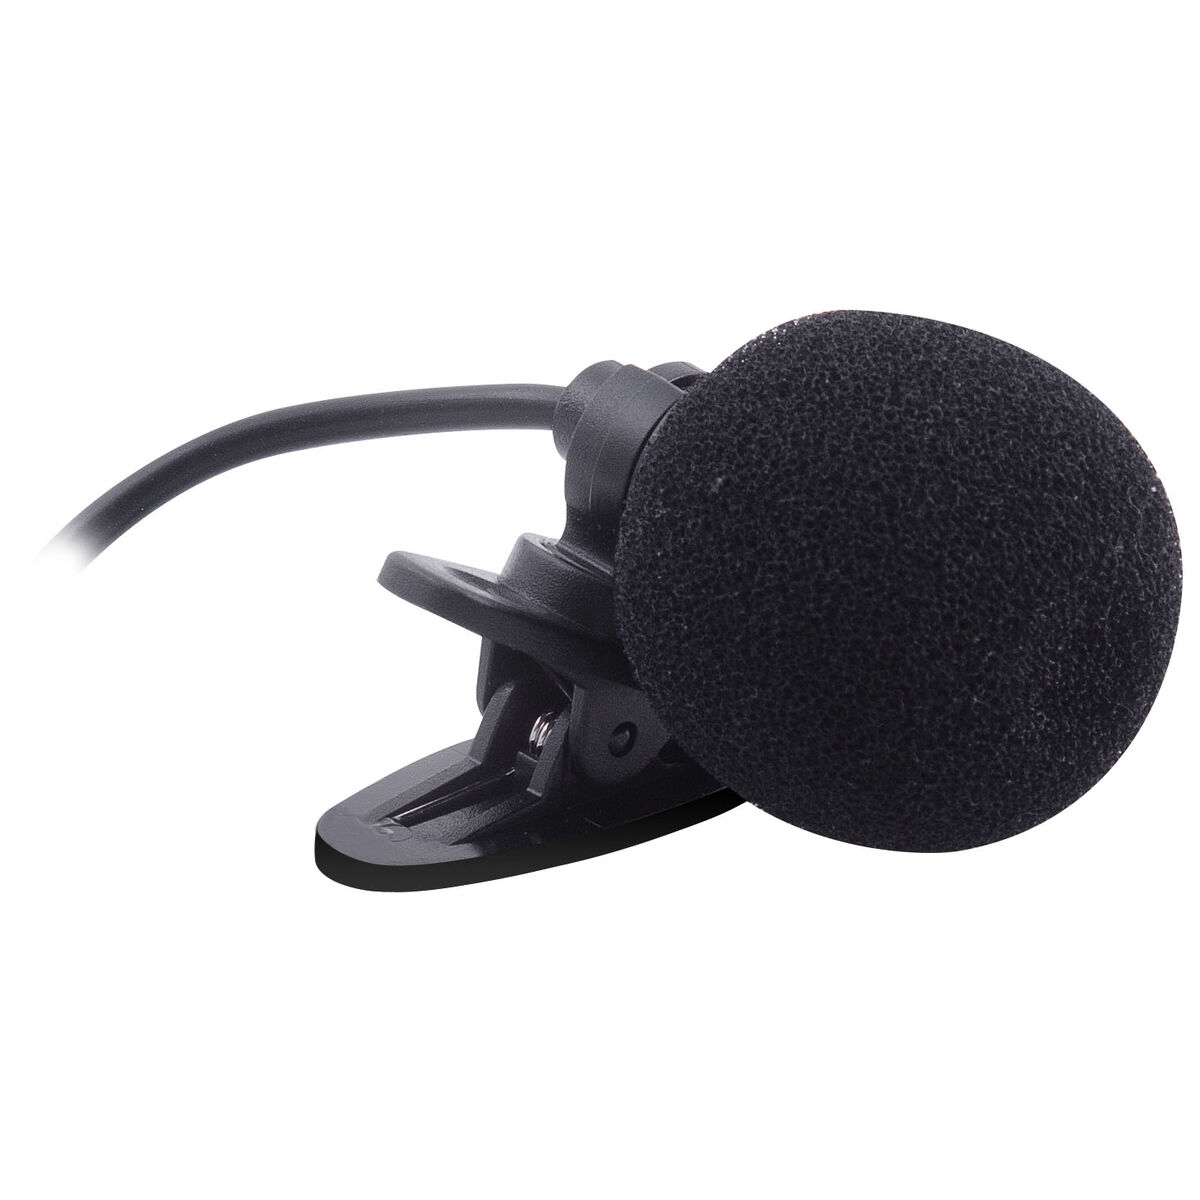 Microfon Trevi EM408 Negru Fără Fir